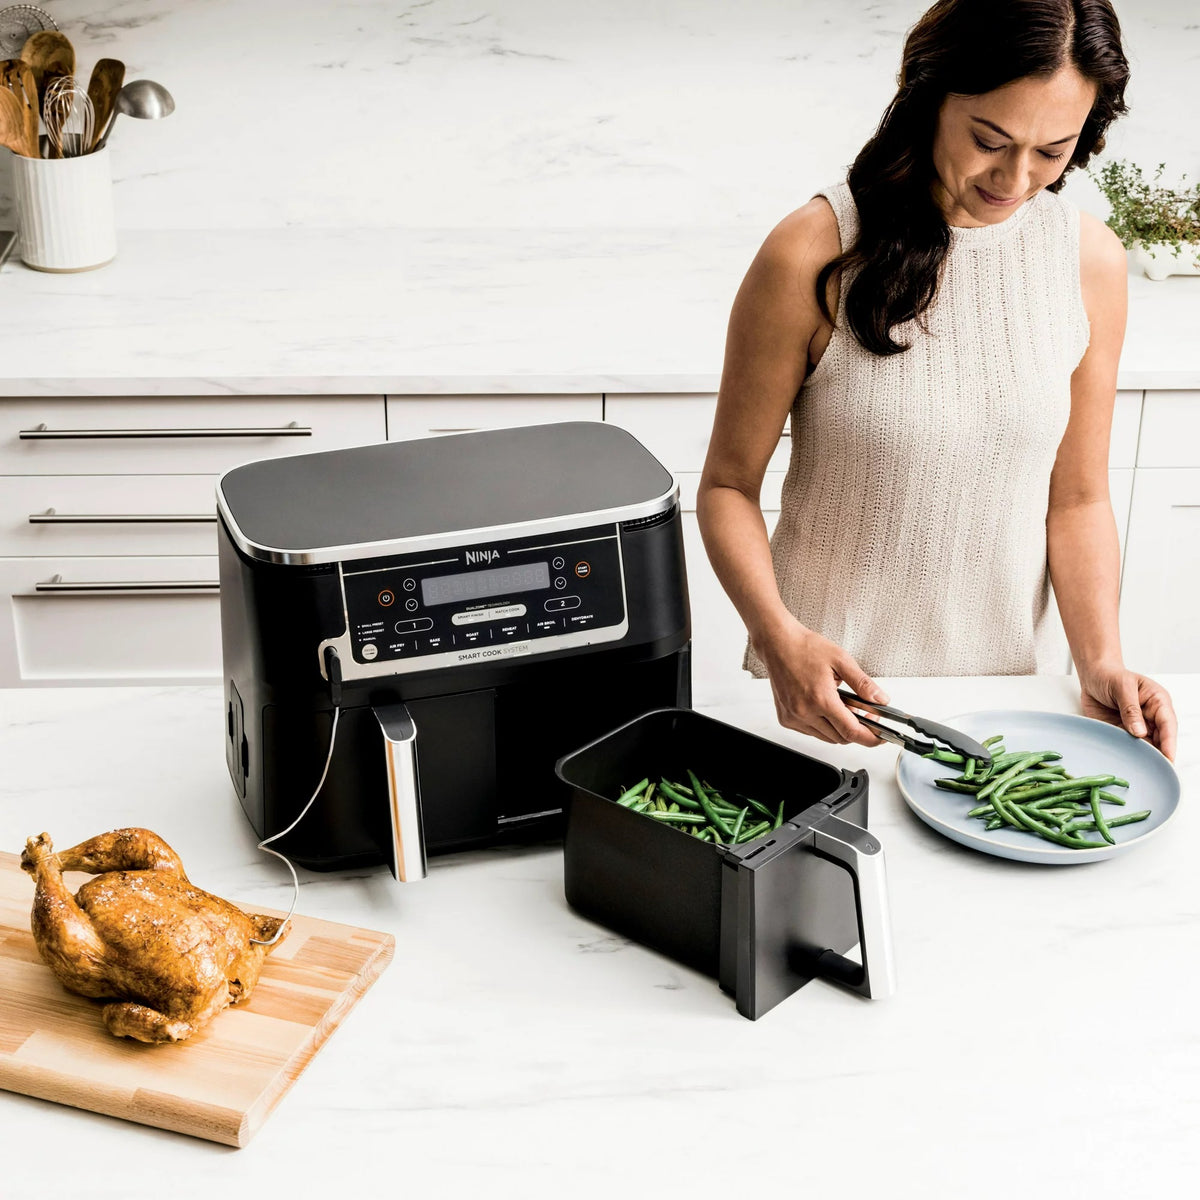 Gourmia Air Fryer Oven vs Ninja DZ550 Foodi: Which is Better